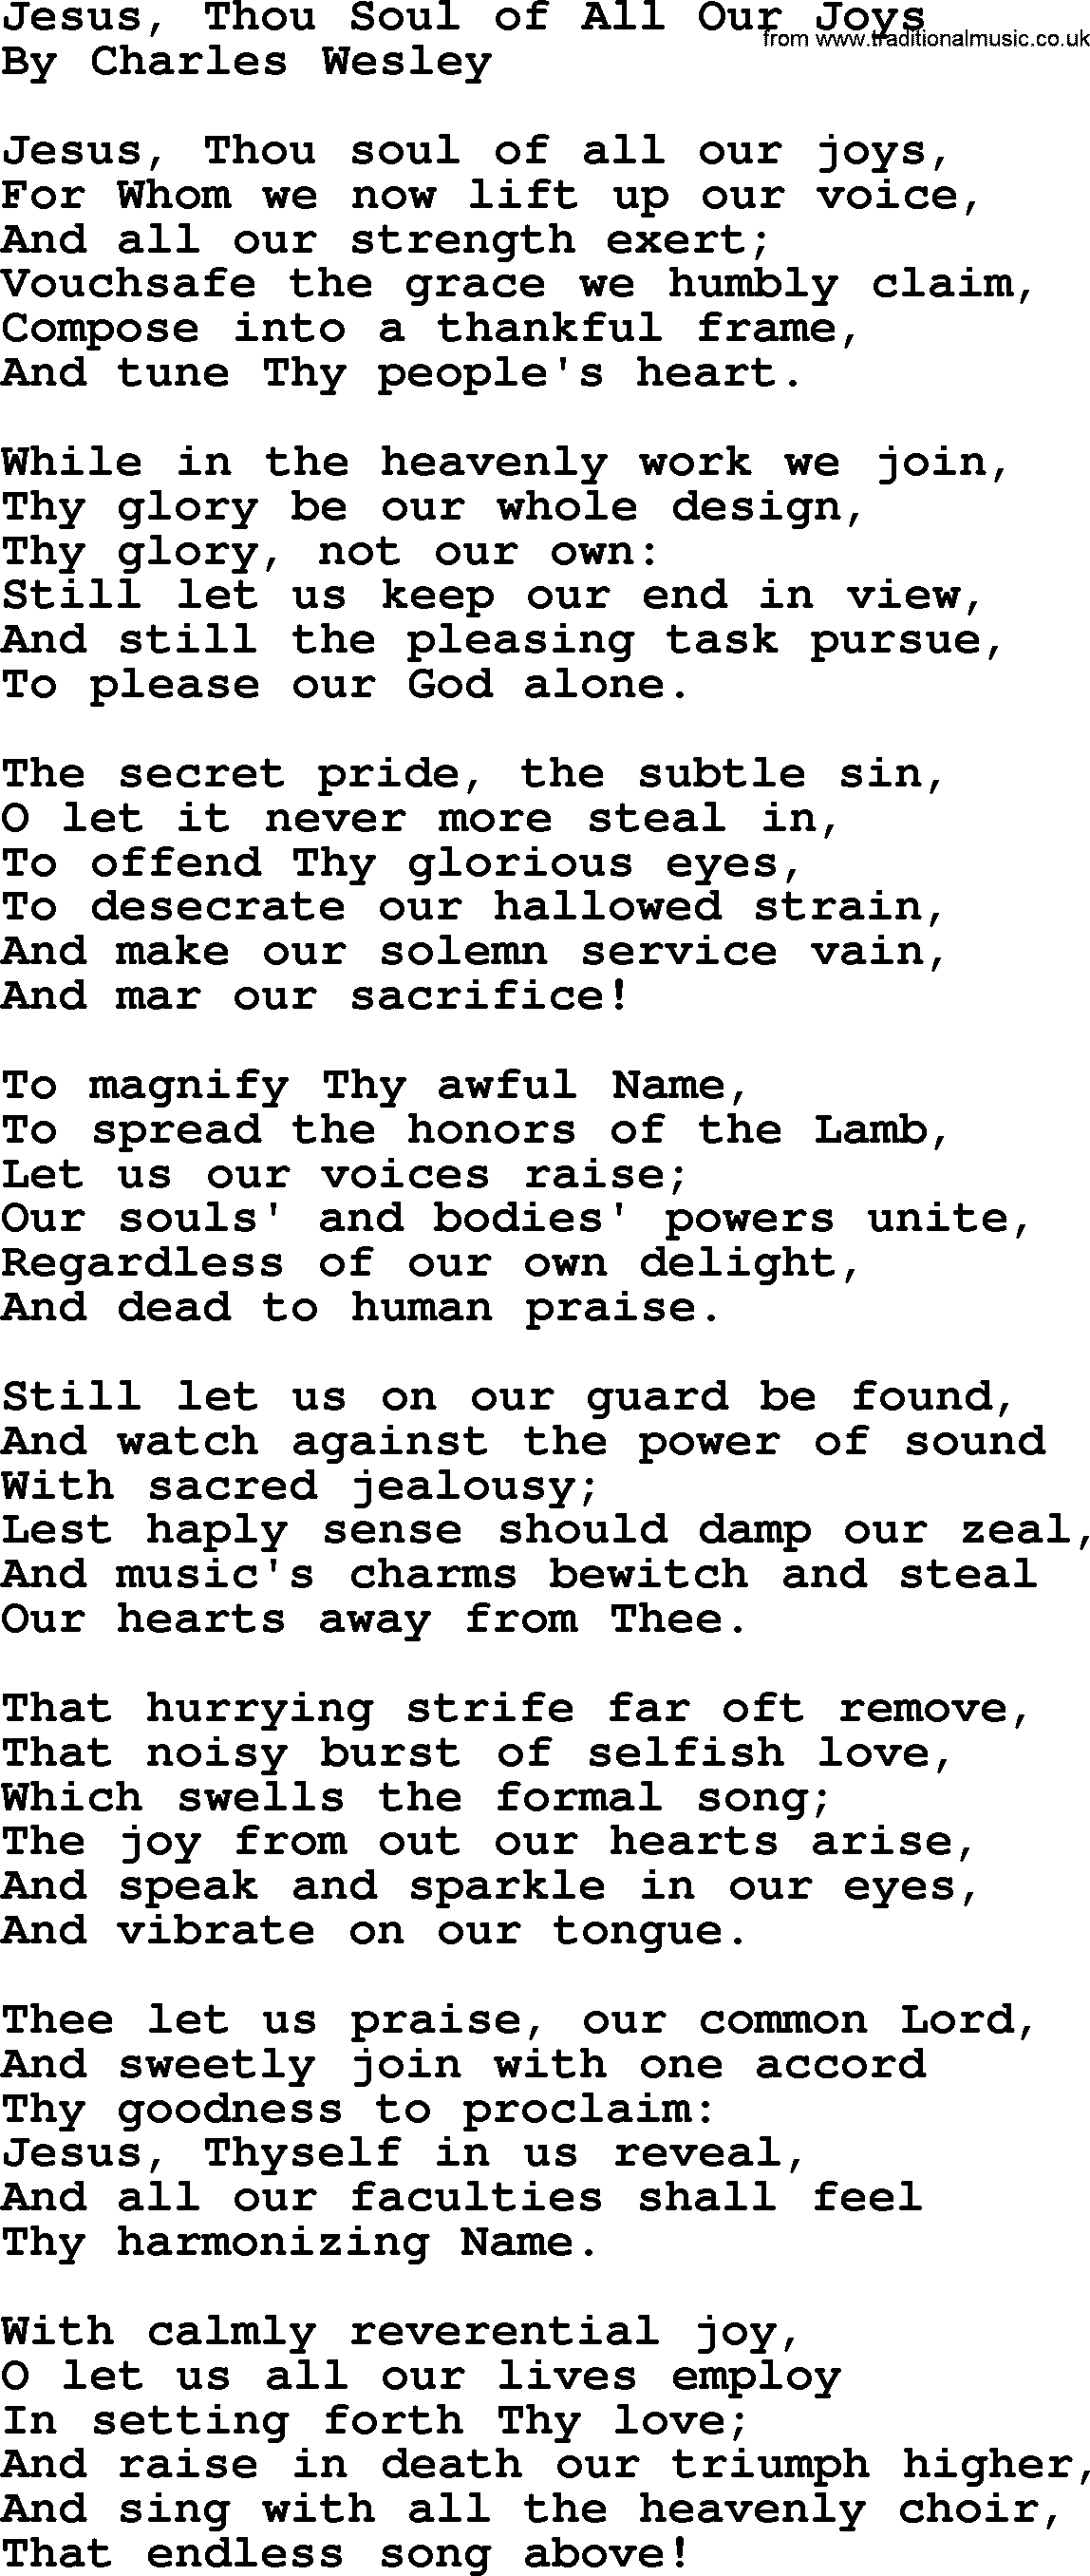 Charles Wesley hymn: Jesus, Thou Soul Of All Our Joys, lyrics